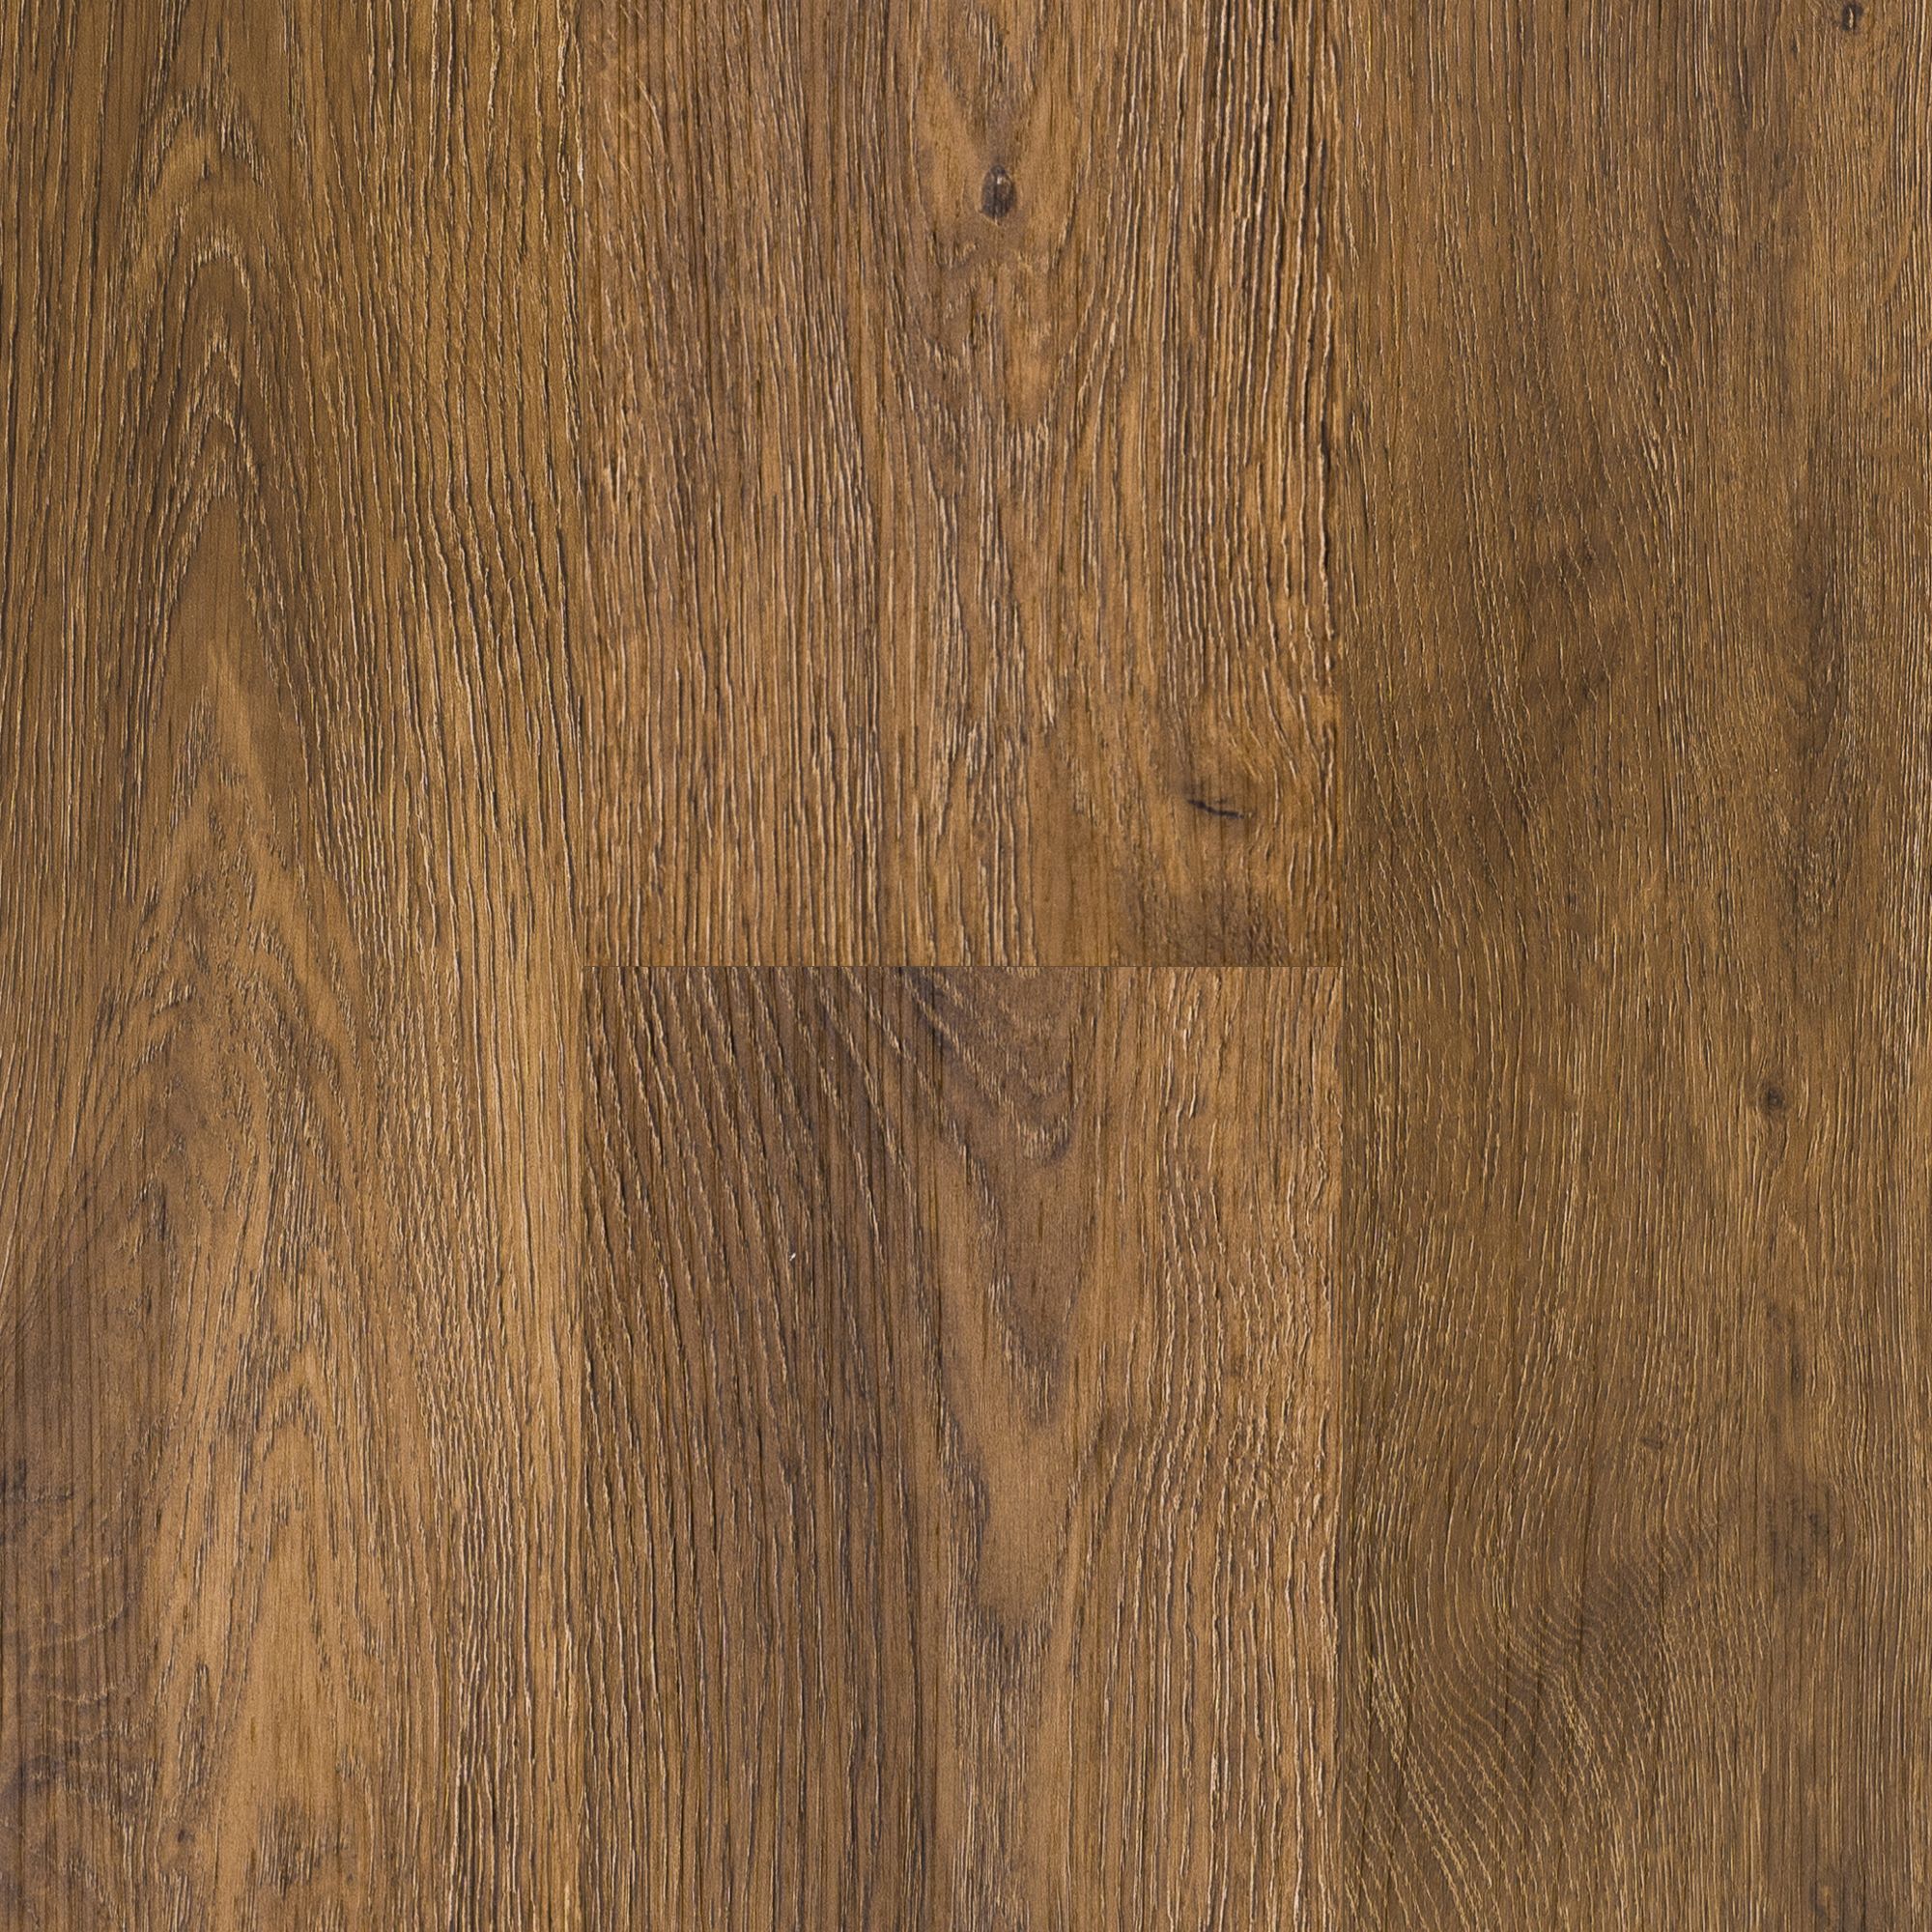 Кварц-виниловый ламинат Van Kleeck Floor Камп VKF-019 виниловый ламинат alpine floor